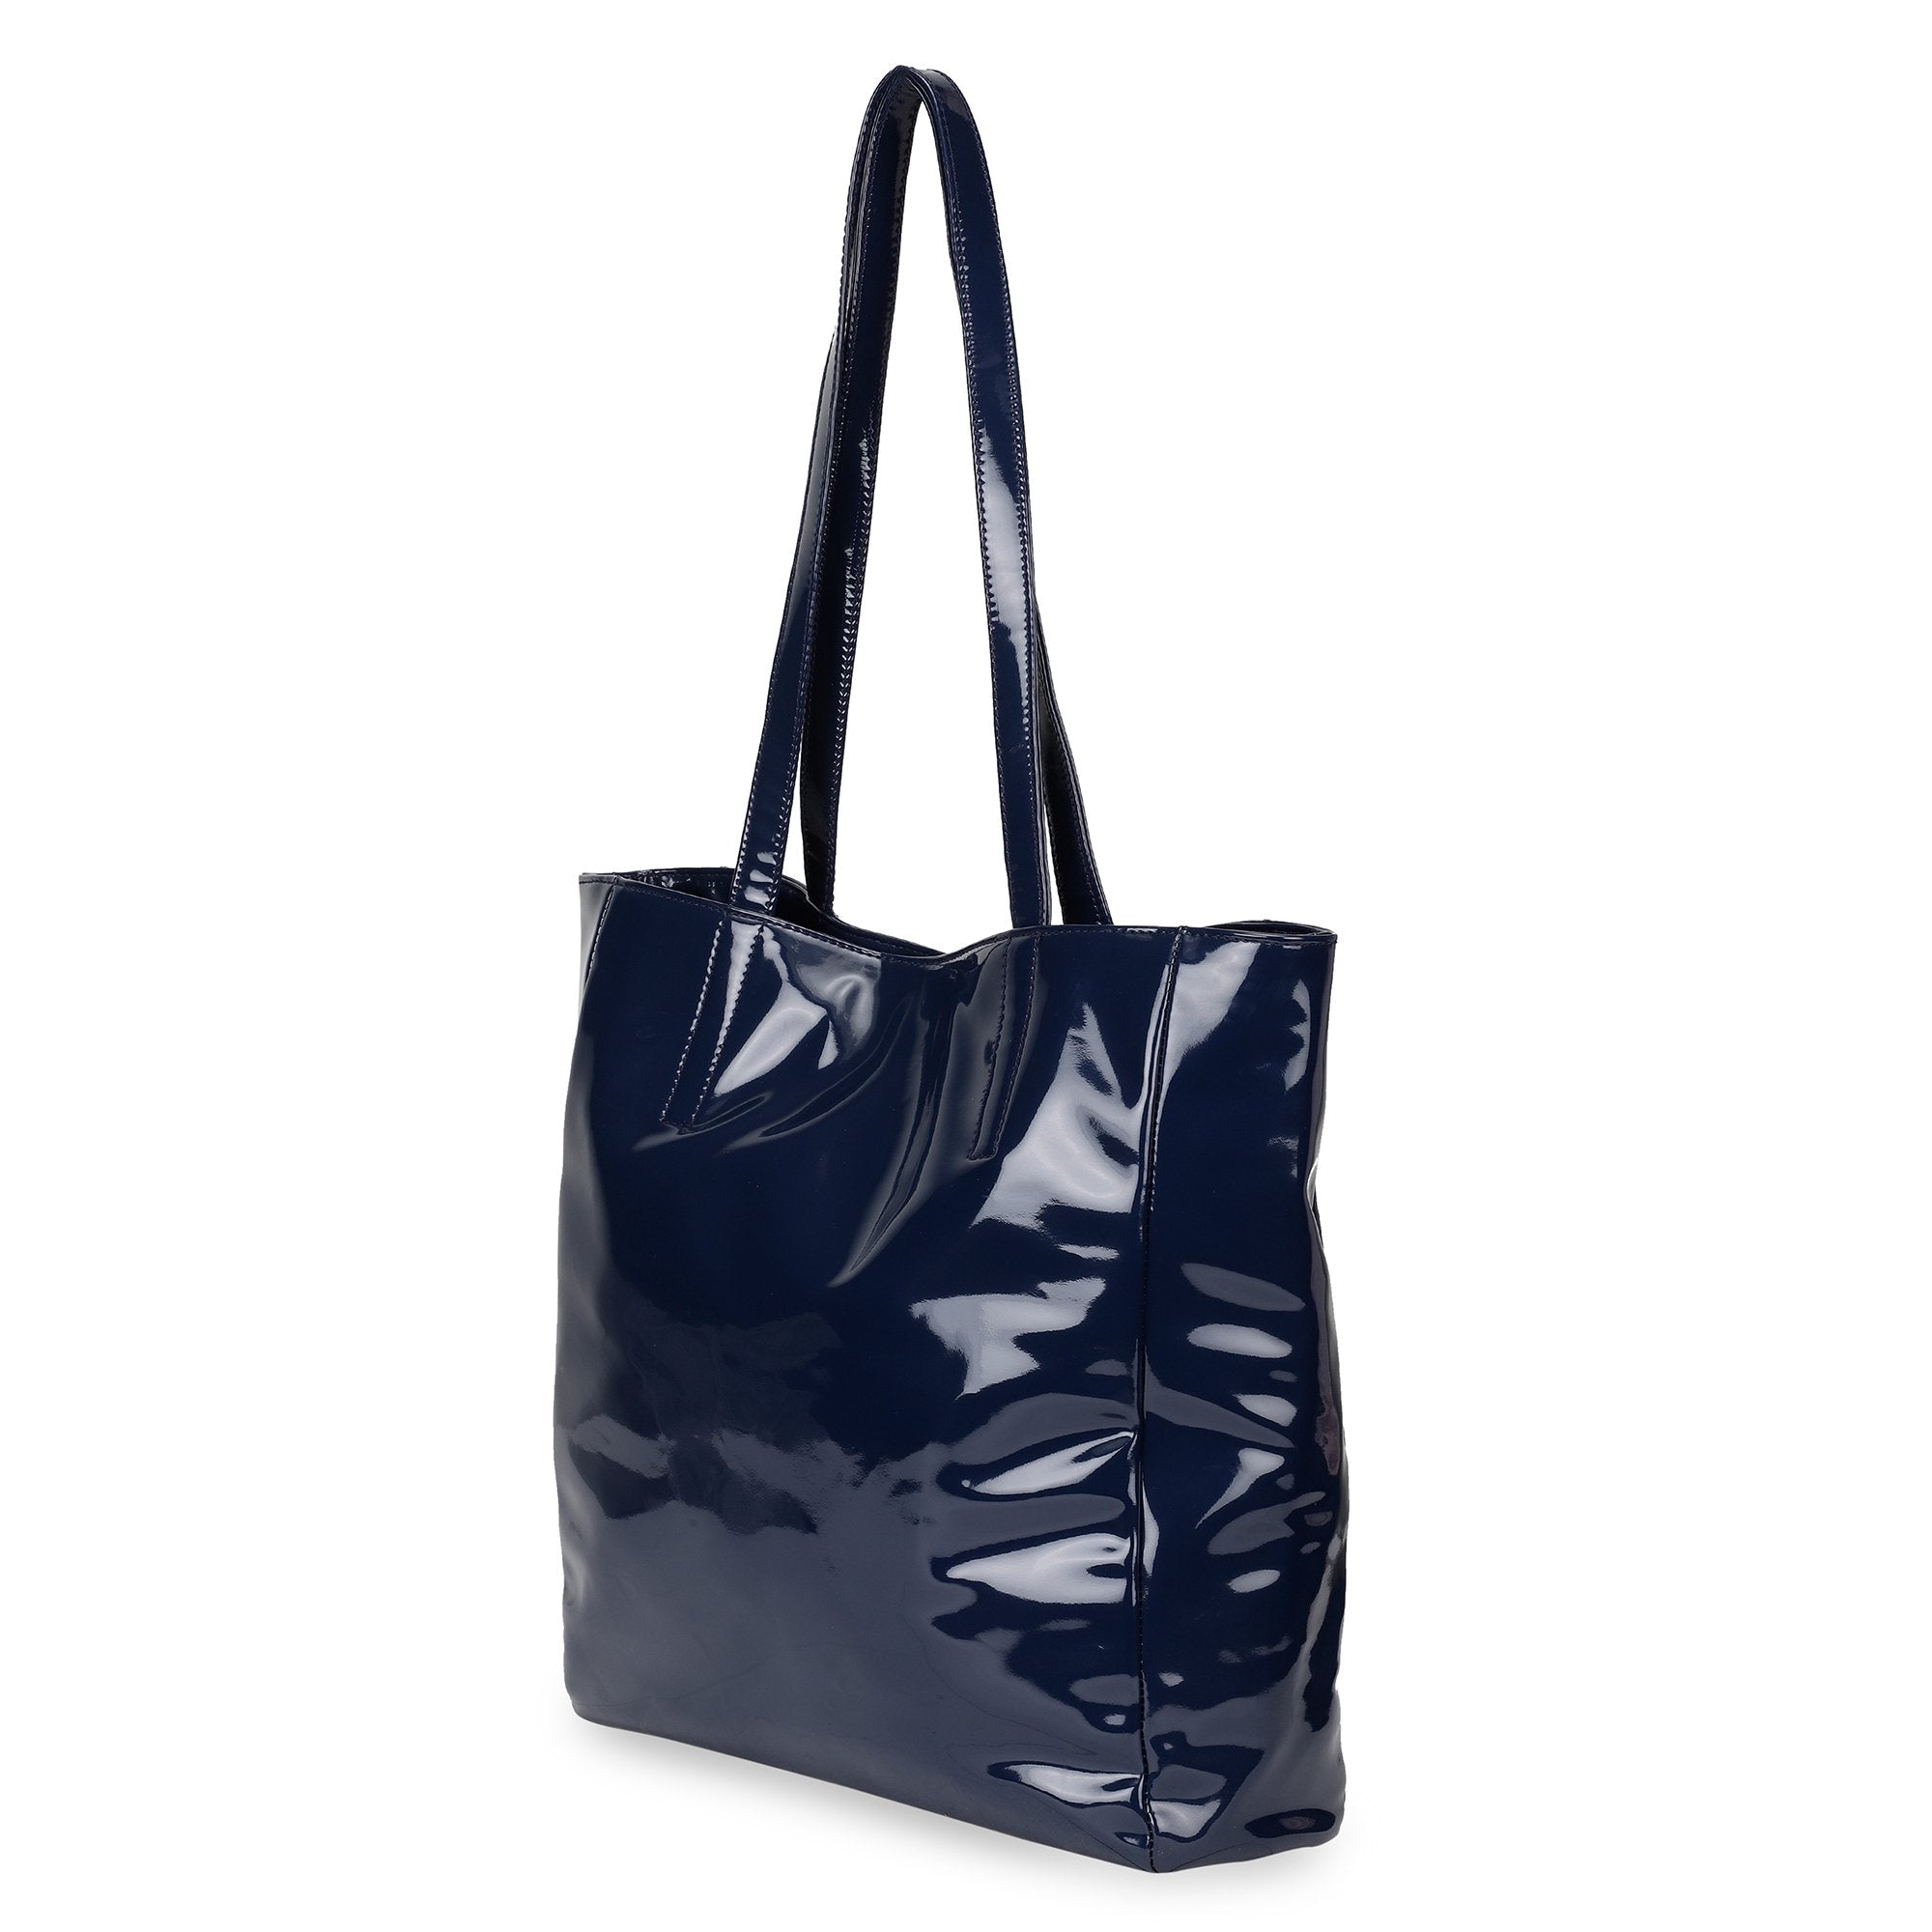 Chic Tote Oversized Handbag - Midnight Blue